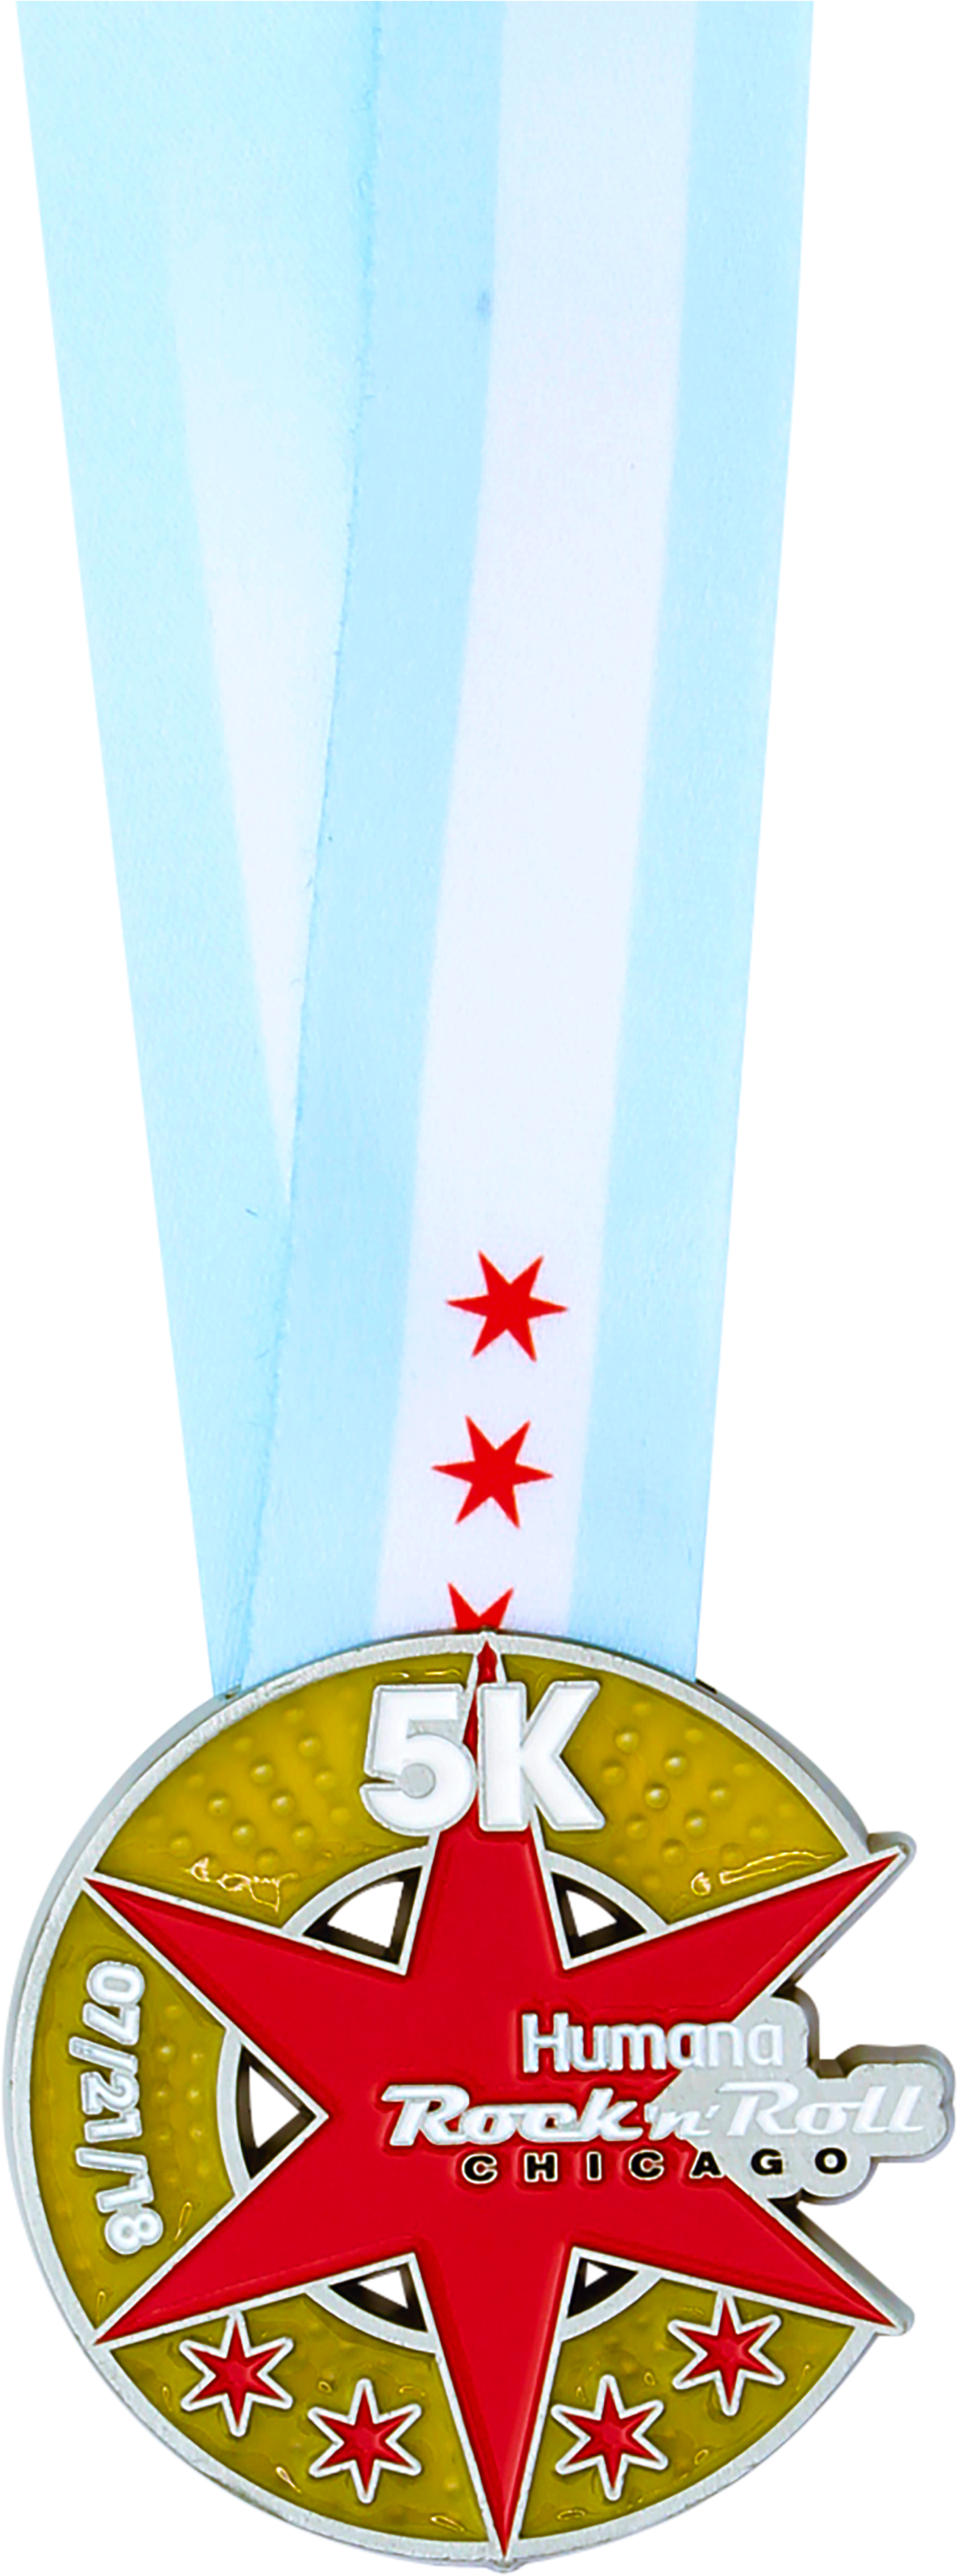 Rock 'n Roll Chicago Medal